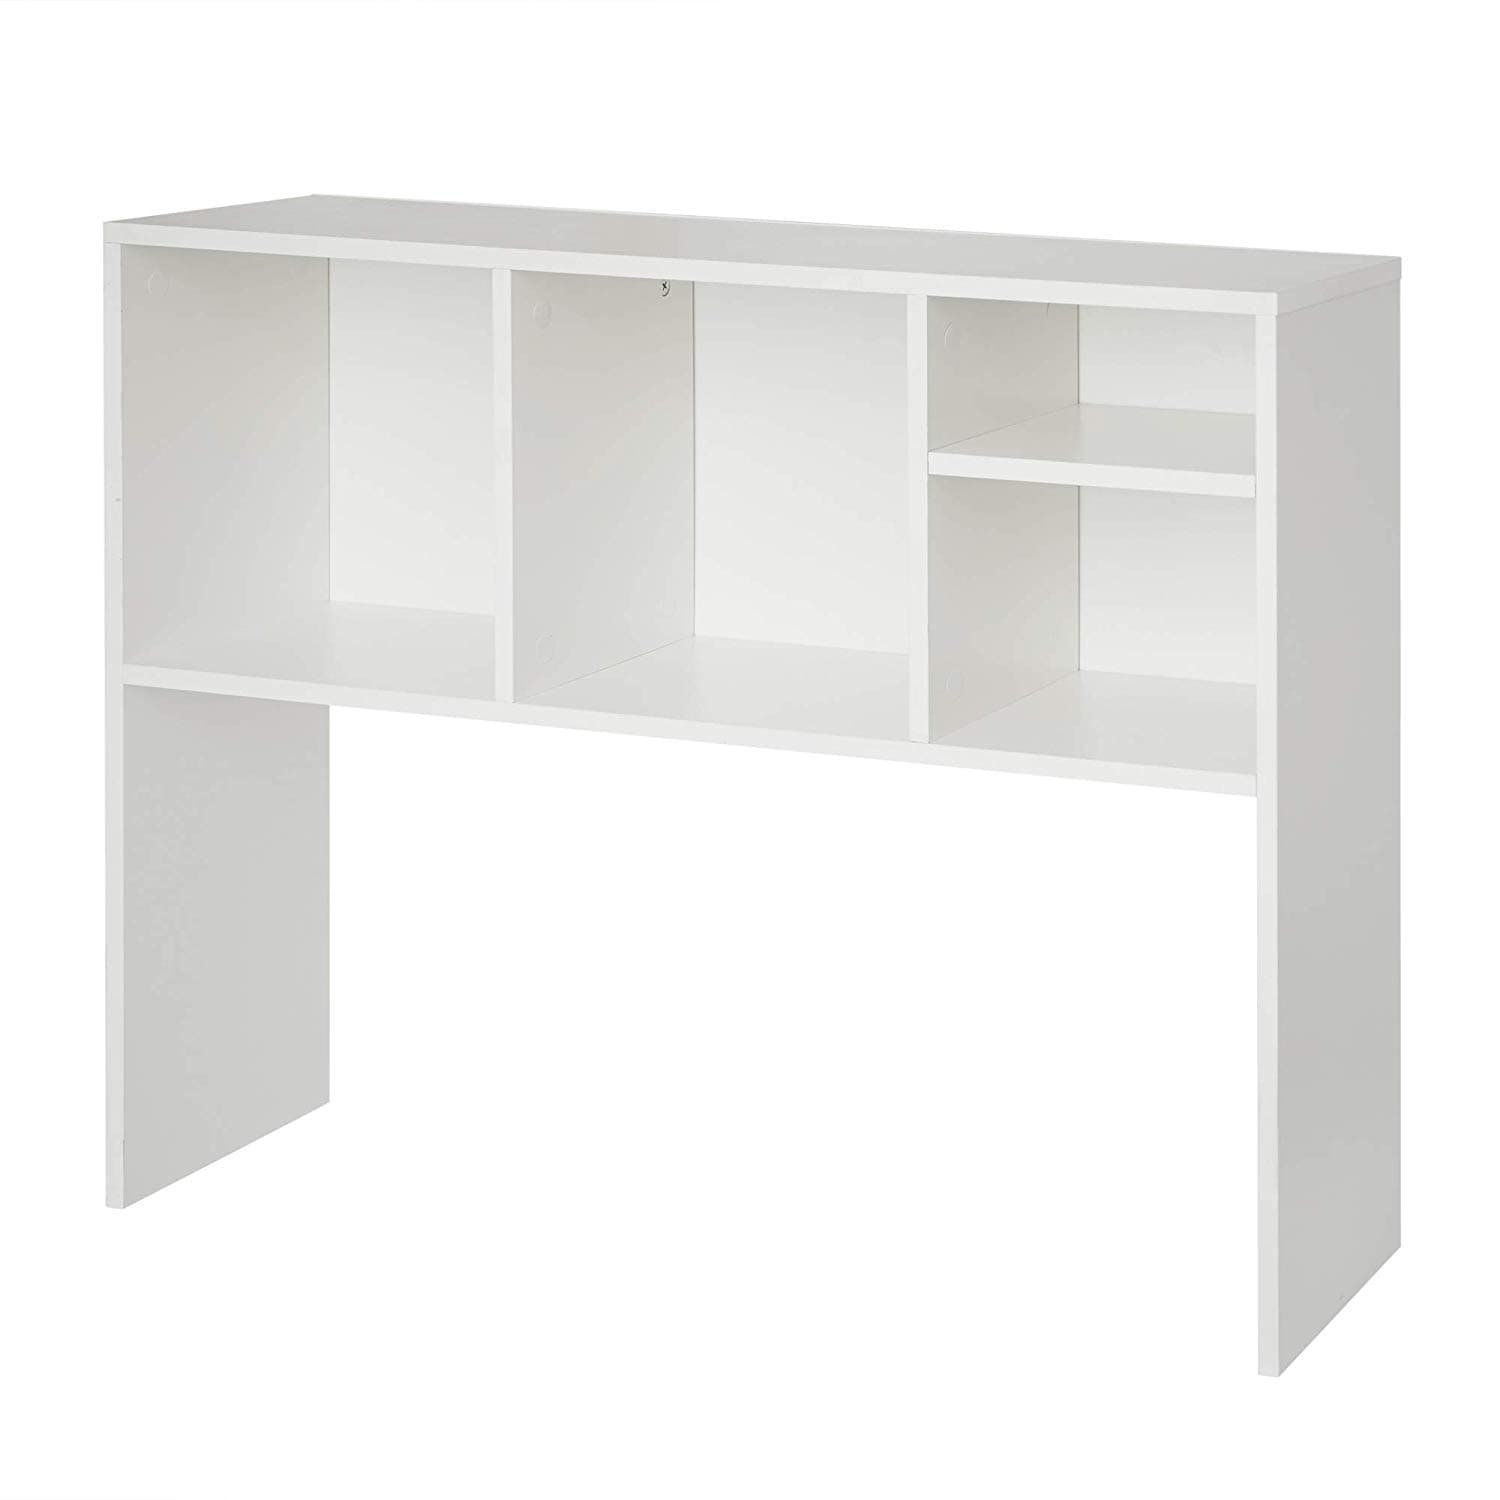 https://ak1.ostkcdn.com/images/products/14602811/DormCo-Cube-White-Wood-Desk-Bookshelf-799d932a-fe65-43ff-91cf-ac7c6a12687f.jpg